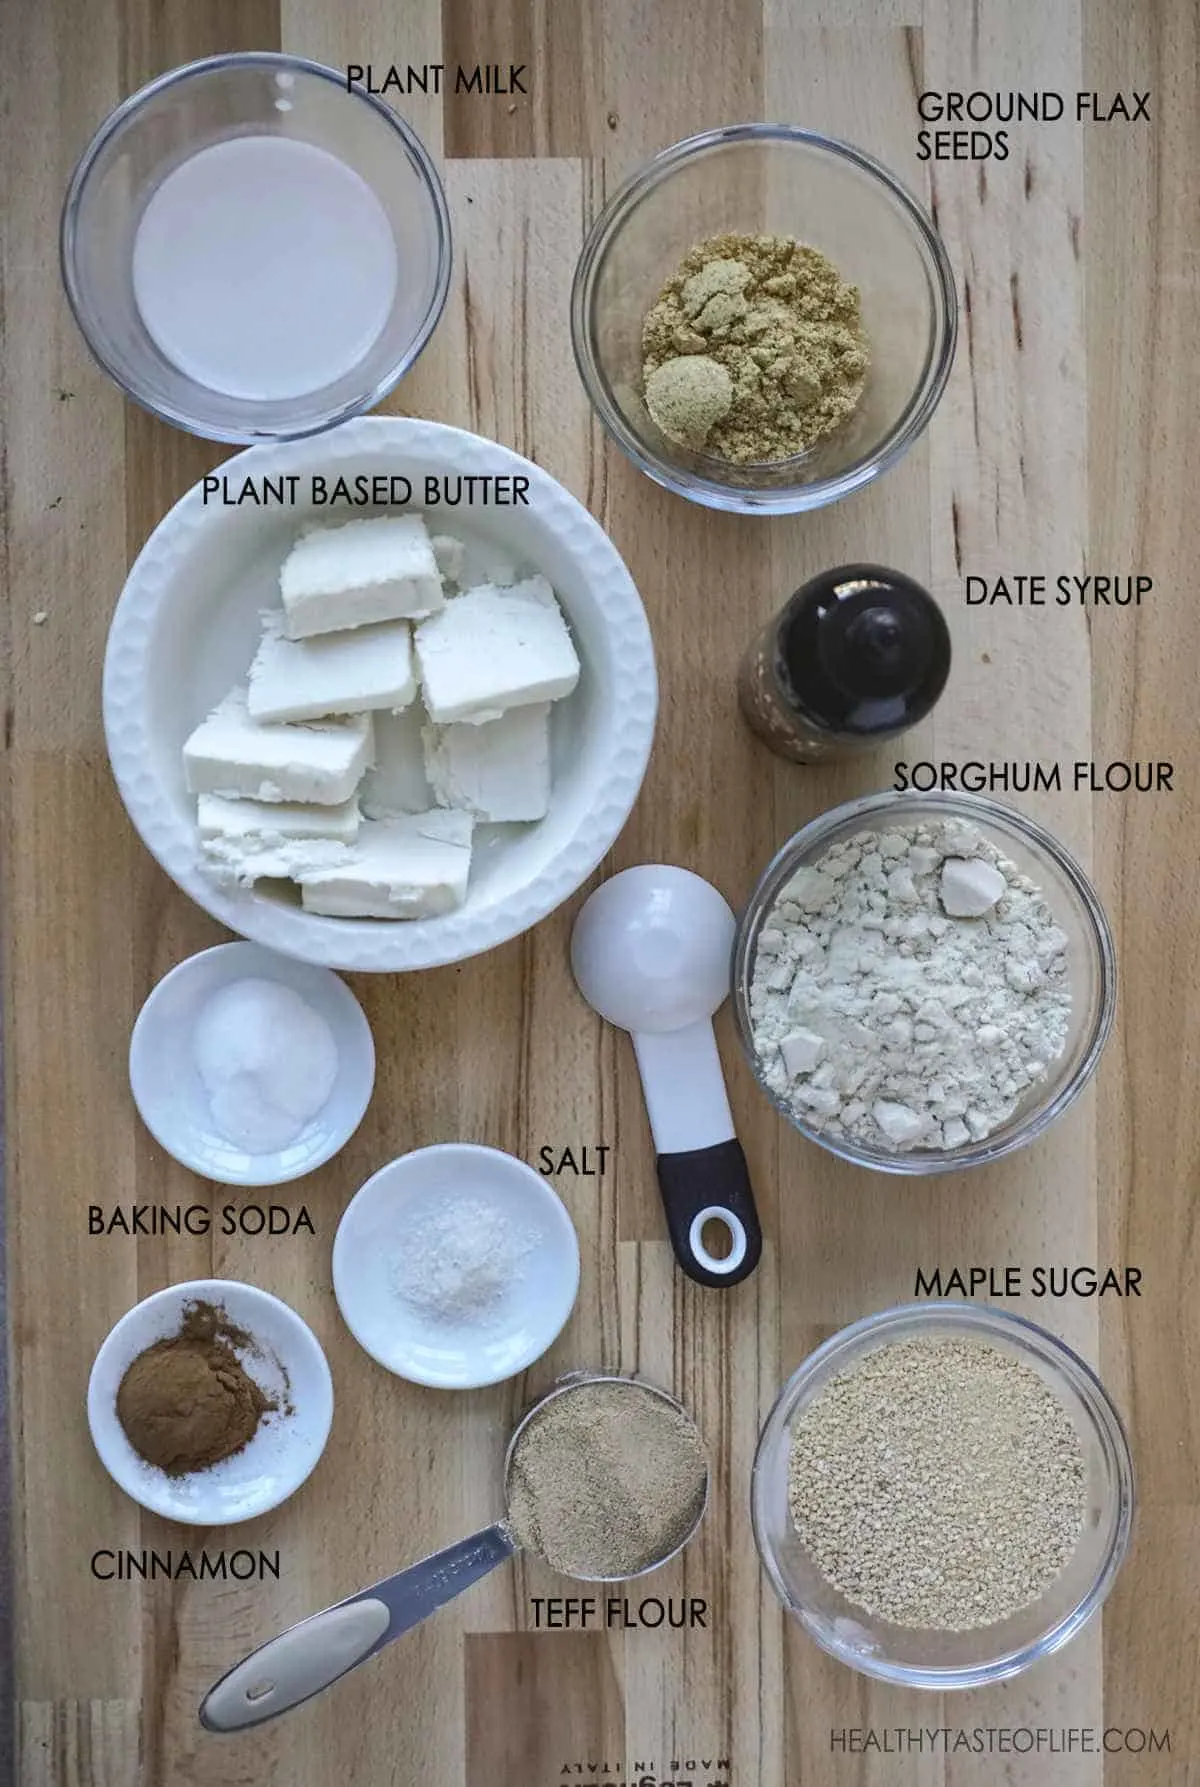 Ingredients For Vegan Gluten Free Graham Cracker Recipe: teff flour, sorghum flour, vegan butter, maple sugar, flax seeds, date syrup, plant based milk, baking soda and cinnamon.